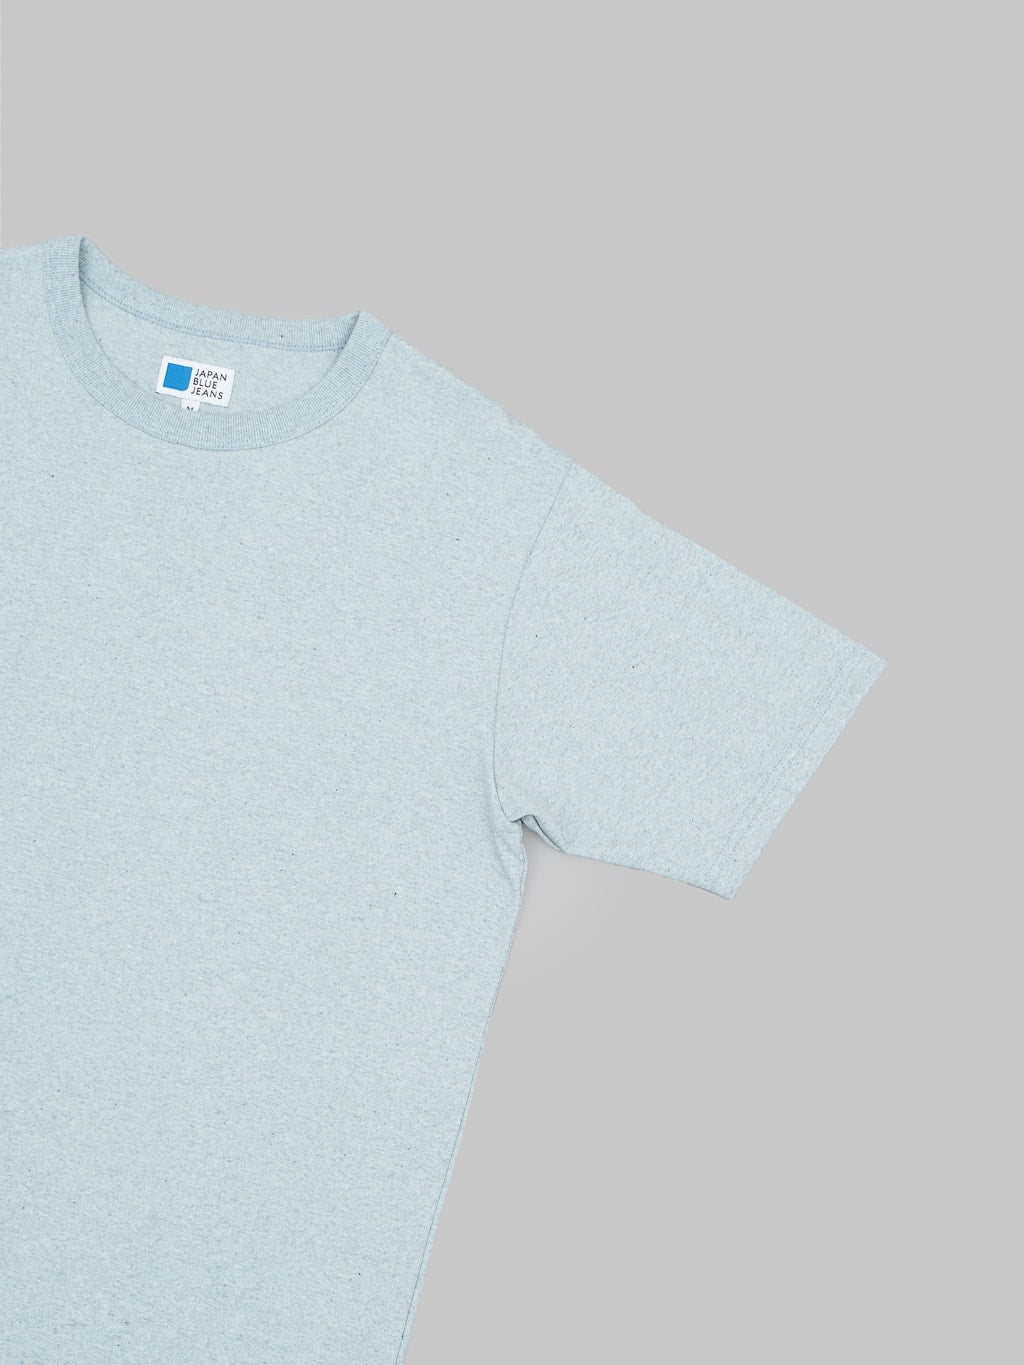 Japan Blue Recycled Denim Tshirt light Indigo short sleeve